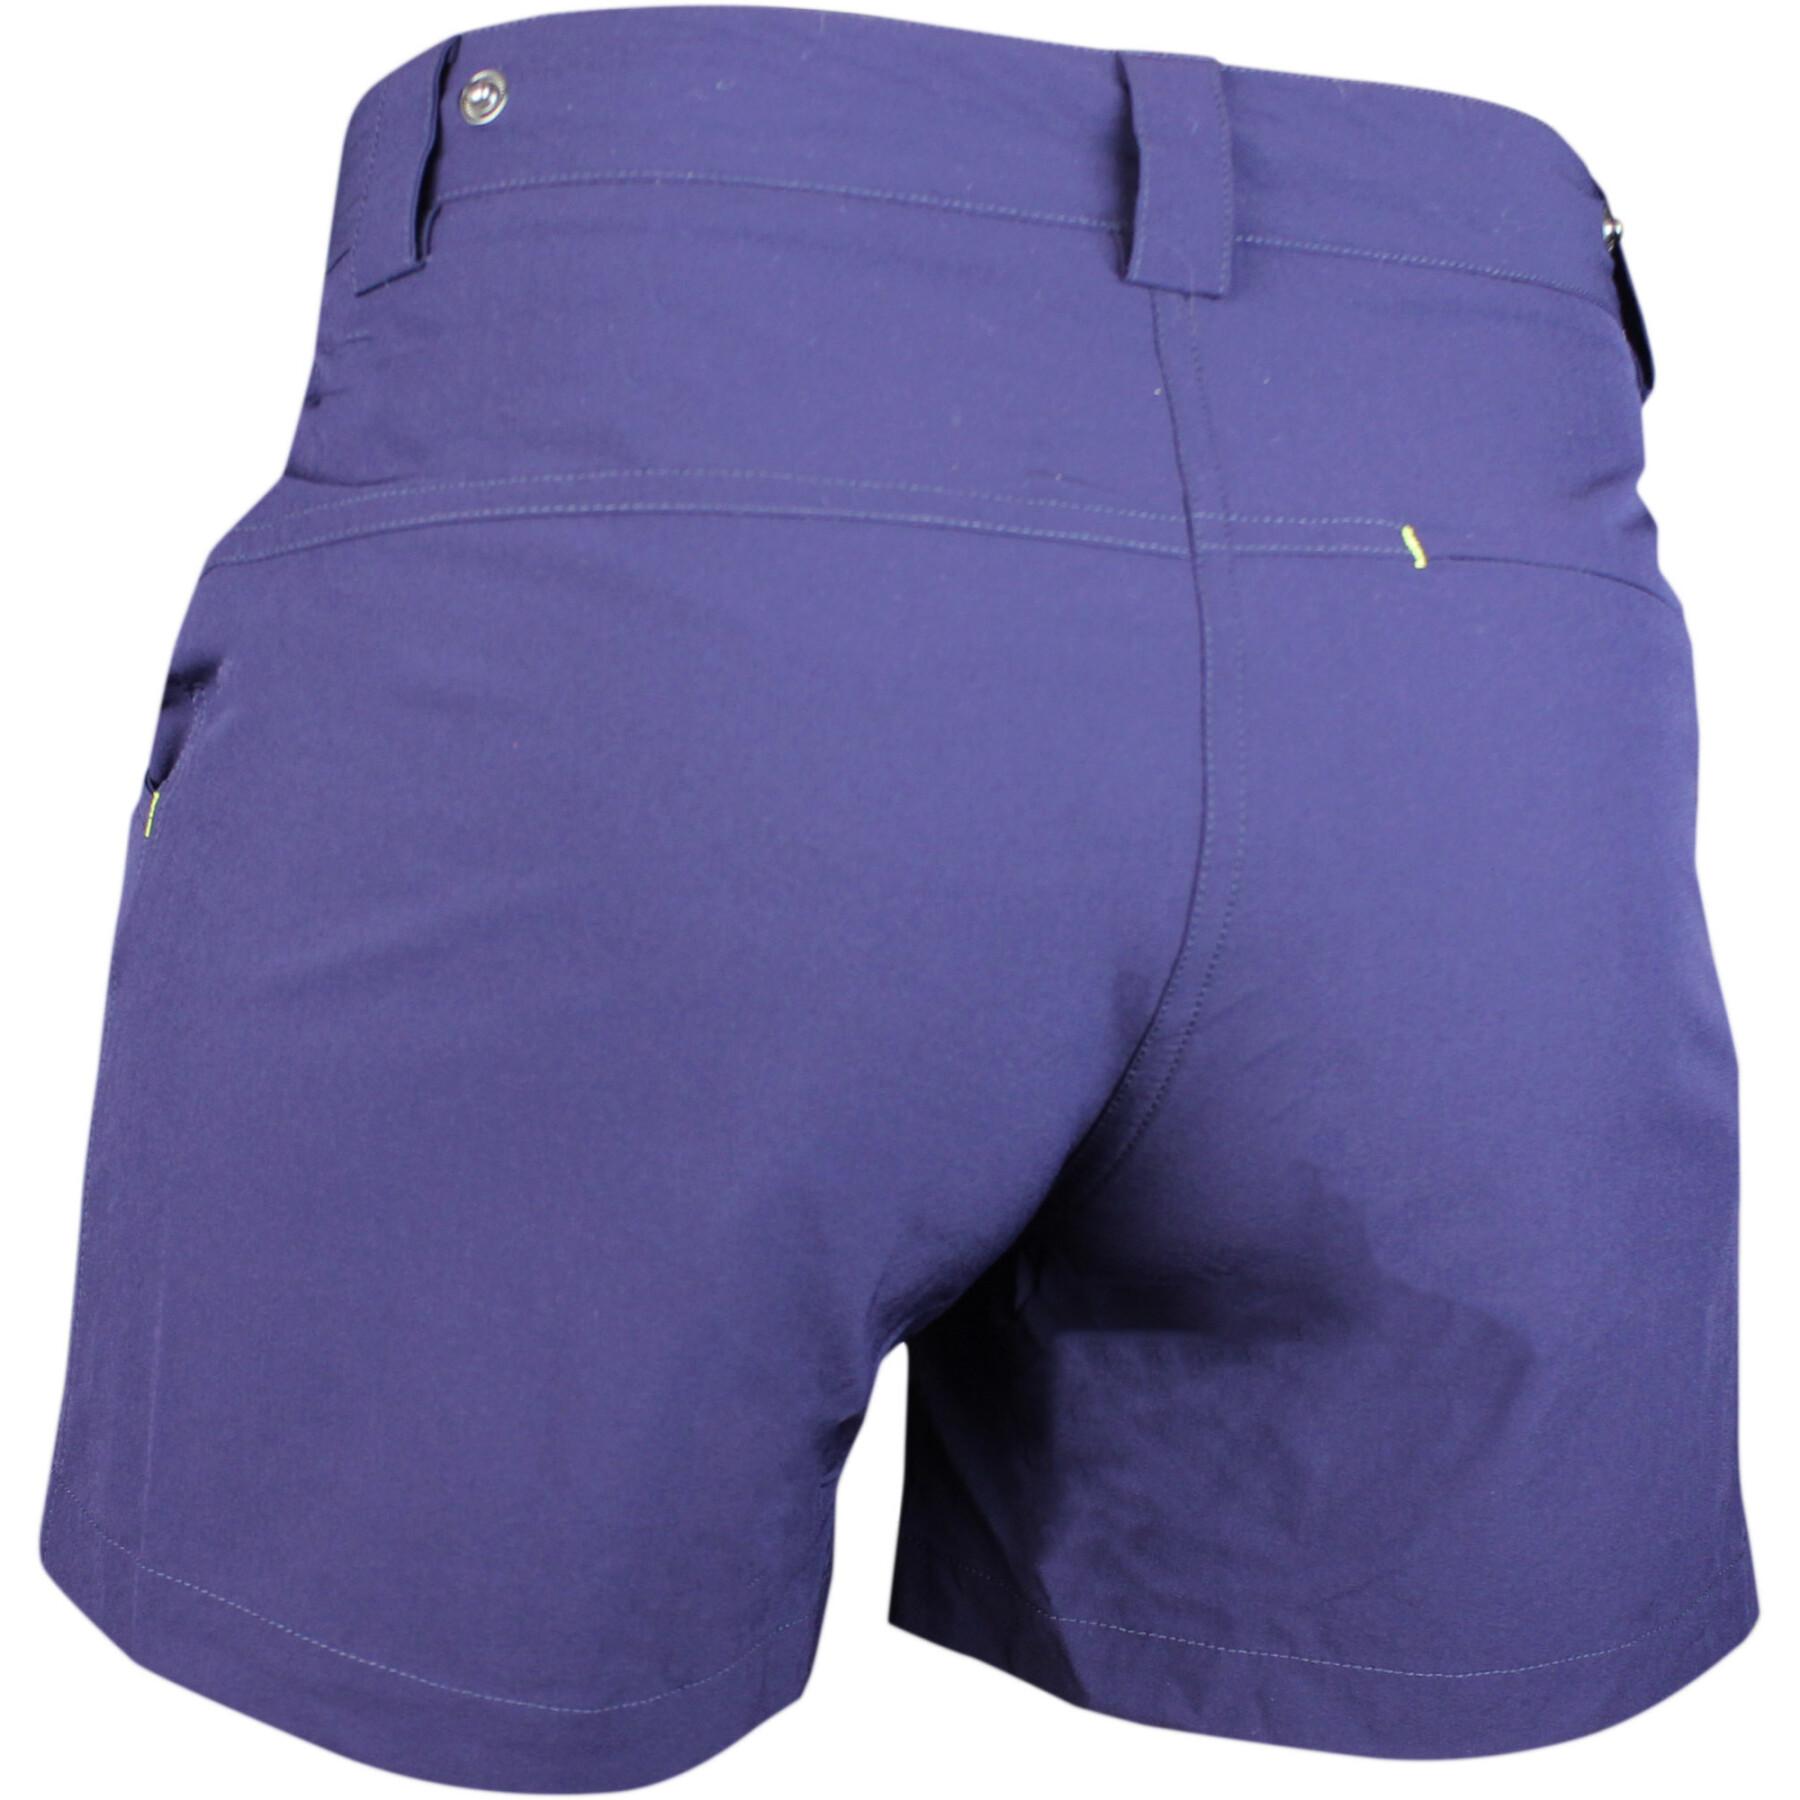 Women's shorts Vertical Aubrac Skort